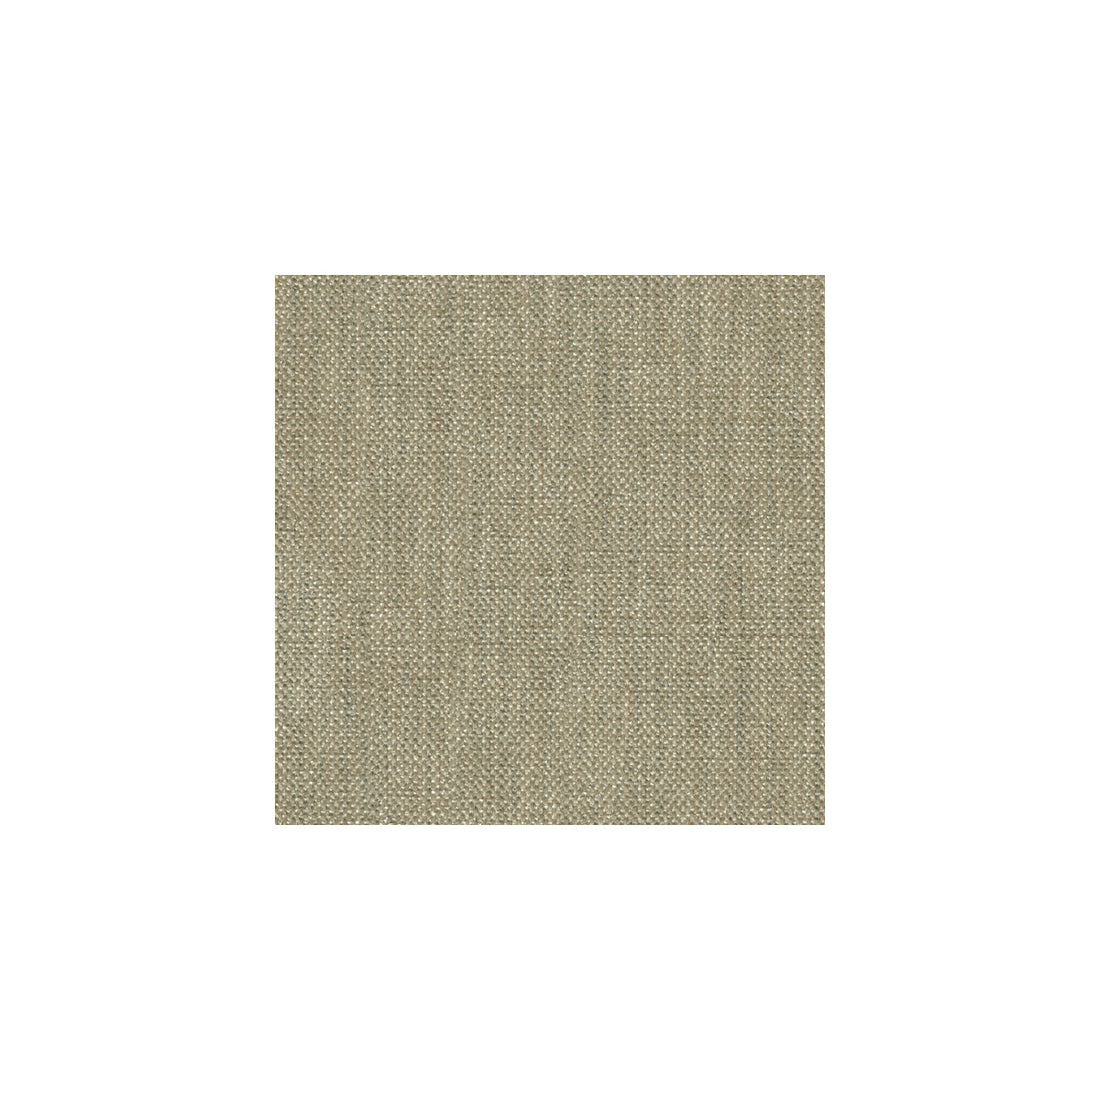 Kravet Smart fabric in 32963-11 color - pattern 32963.11.0 - by Kravet Smart